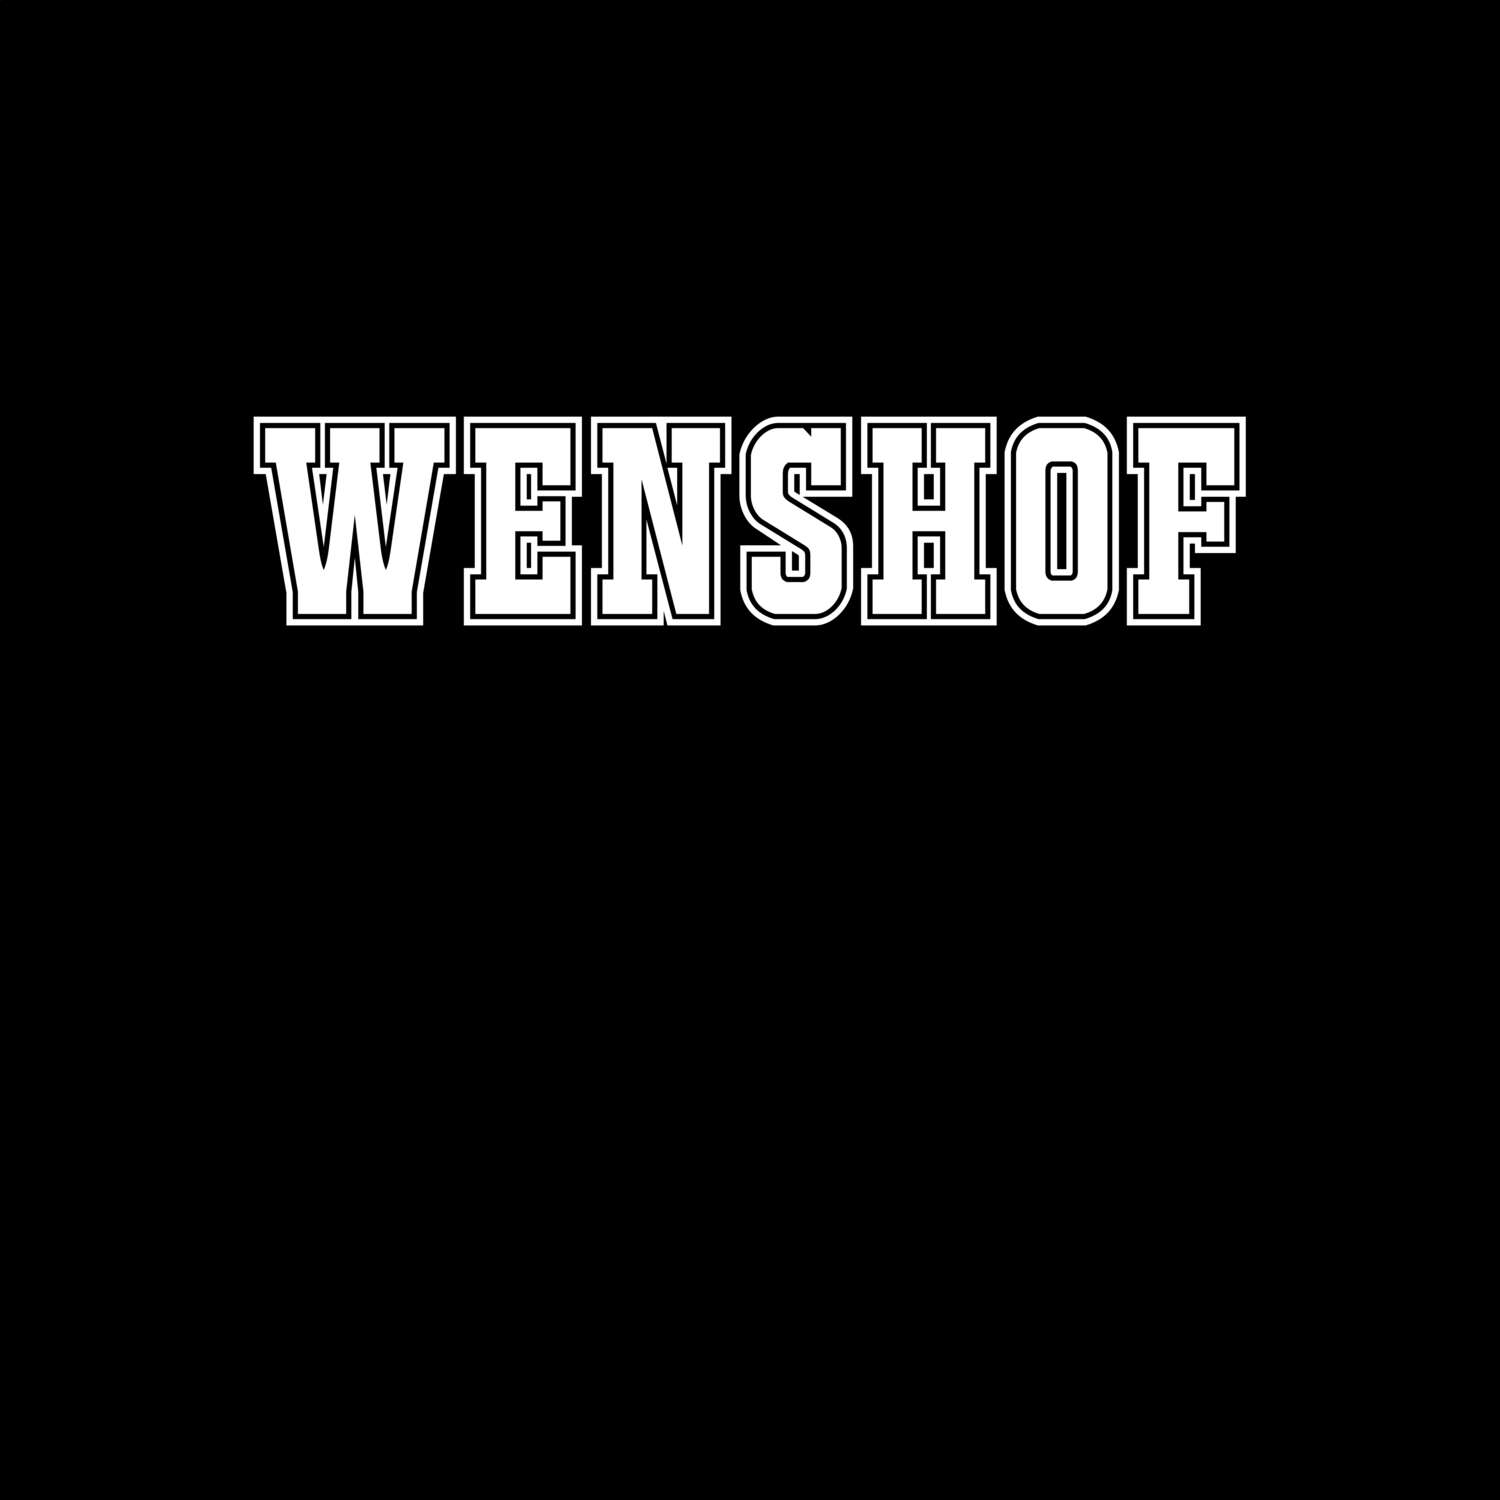 Wenshof T-Shirt »Classic«